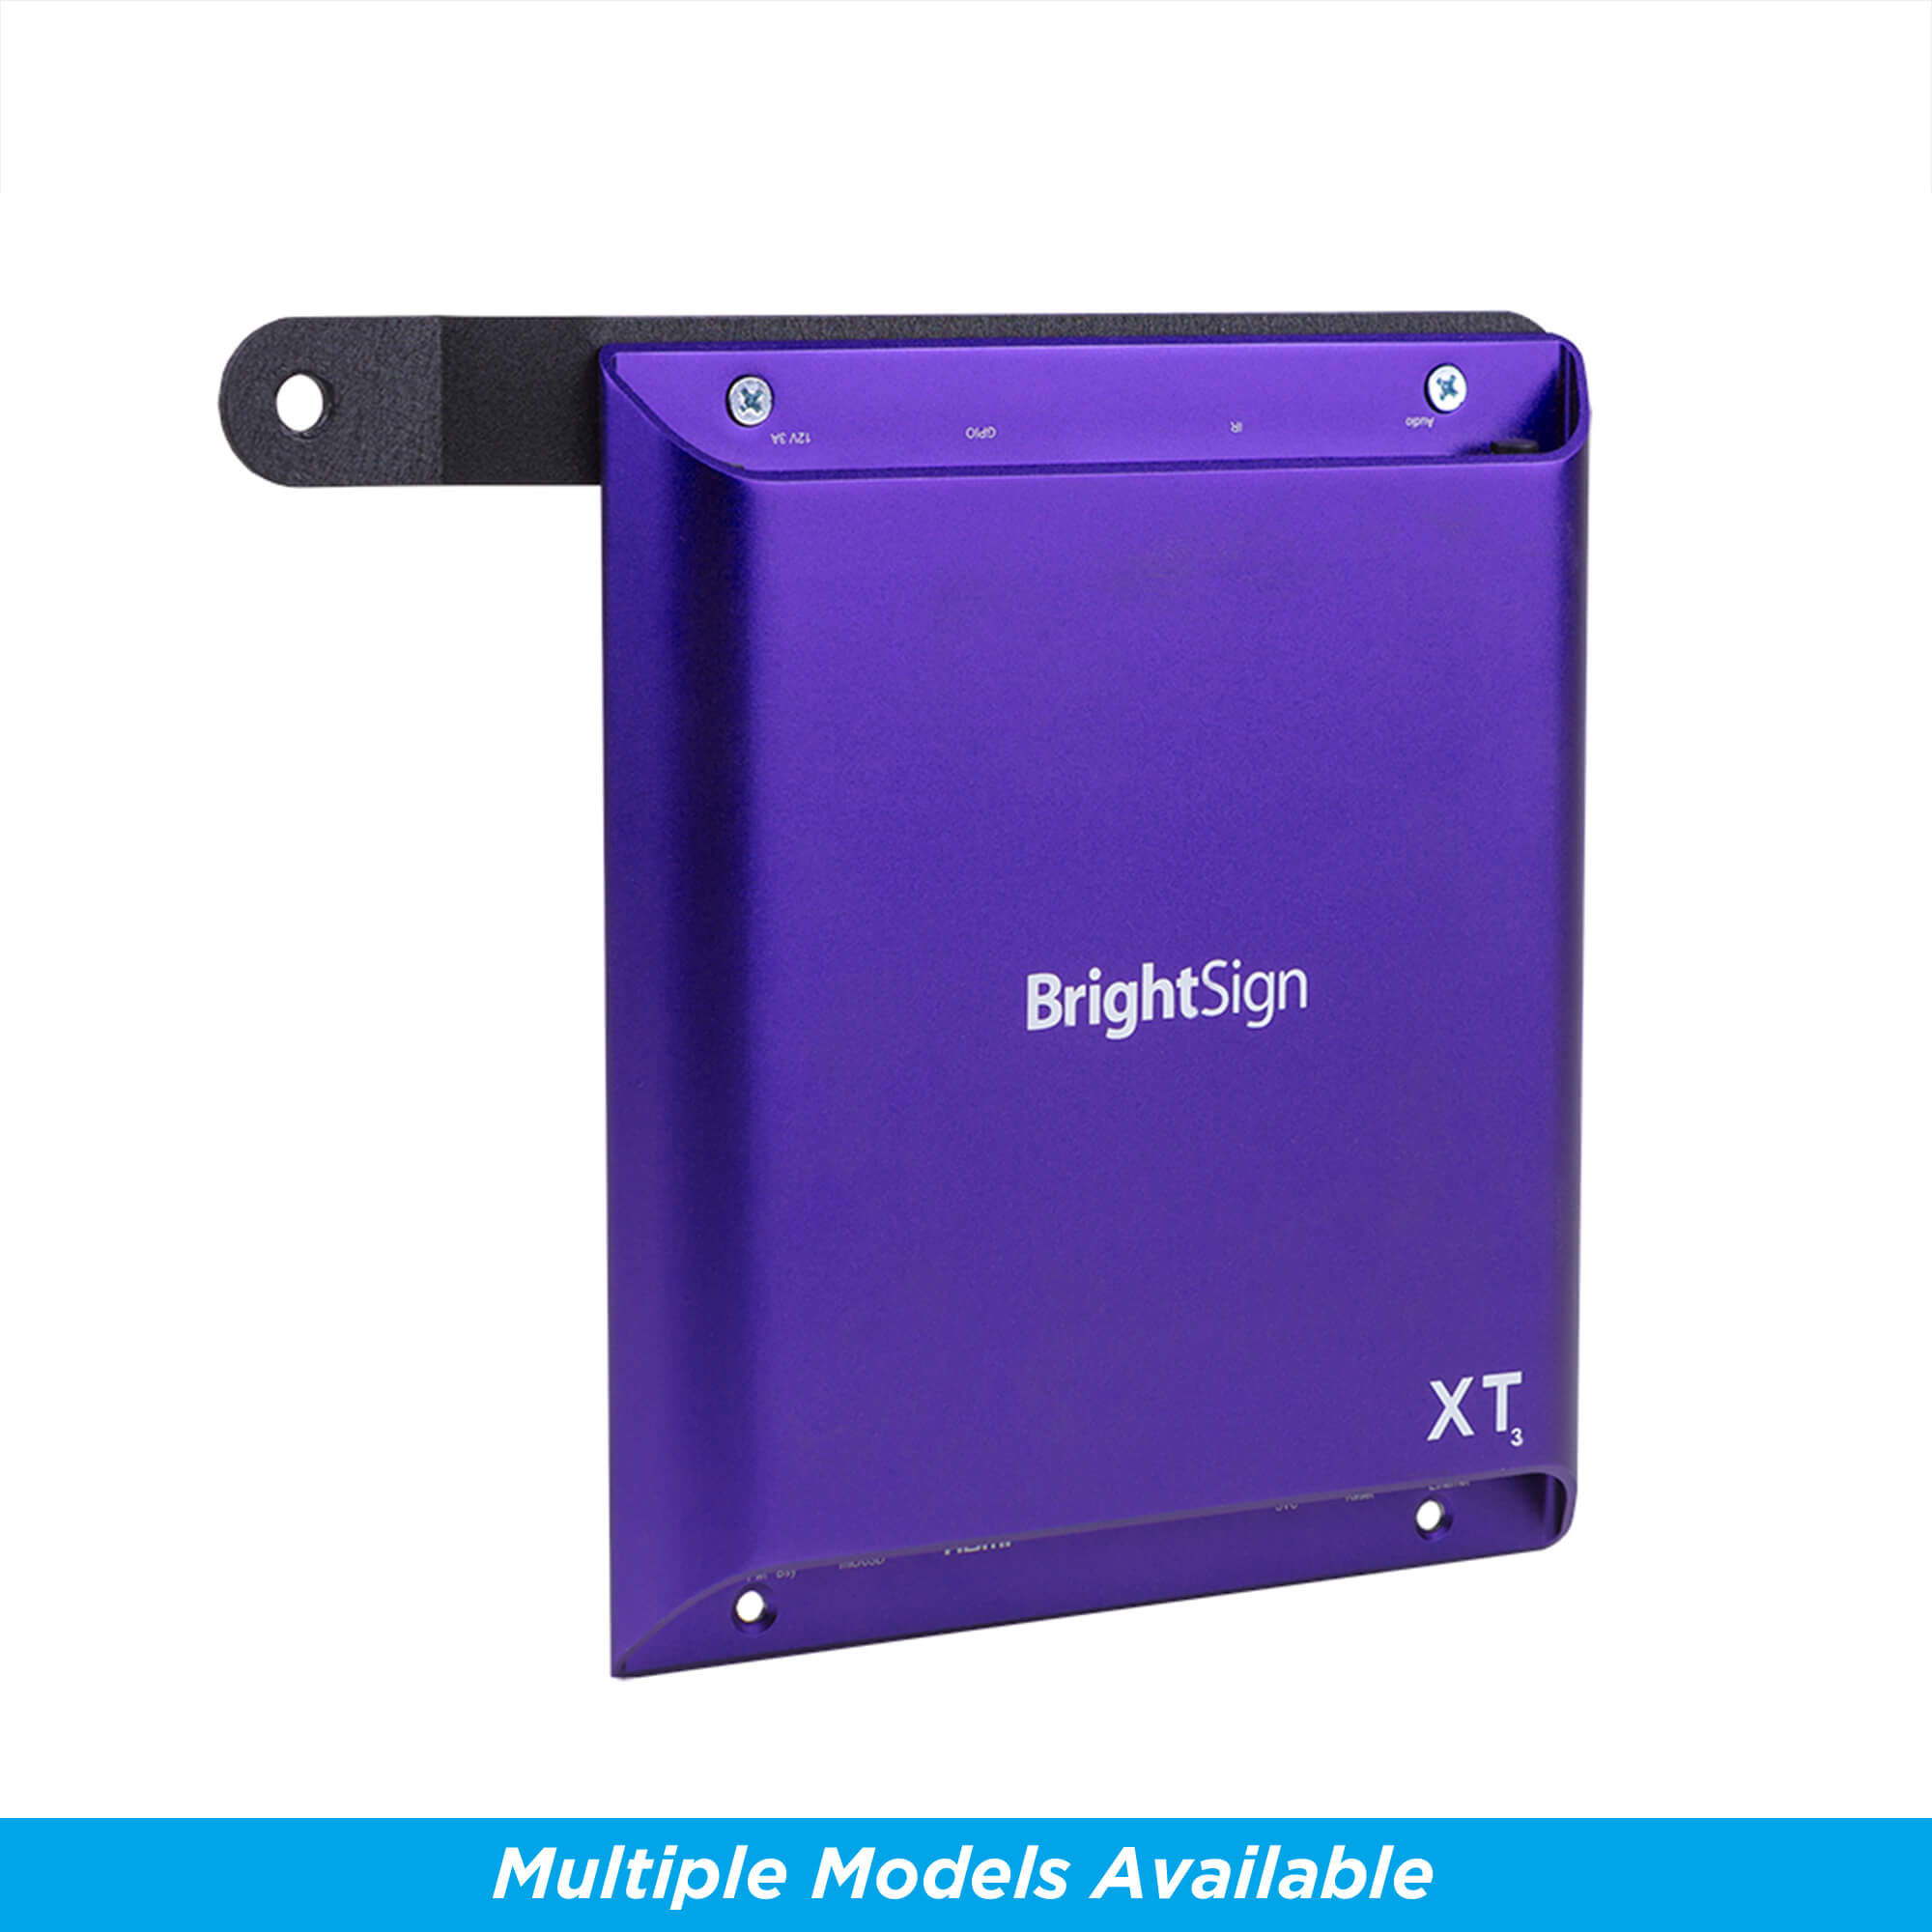 BrightSign Player XT3 mounted to the HIDEit BrightSign Bar VESA Adapter Mount.